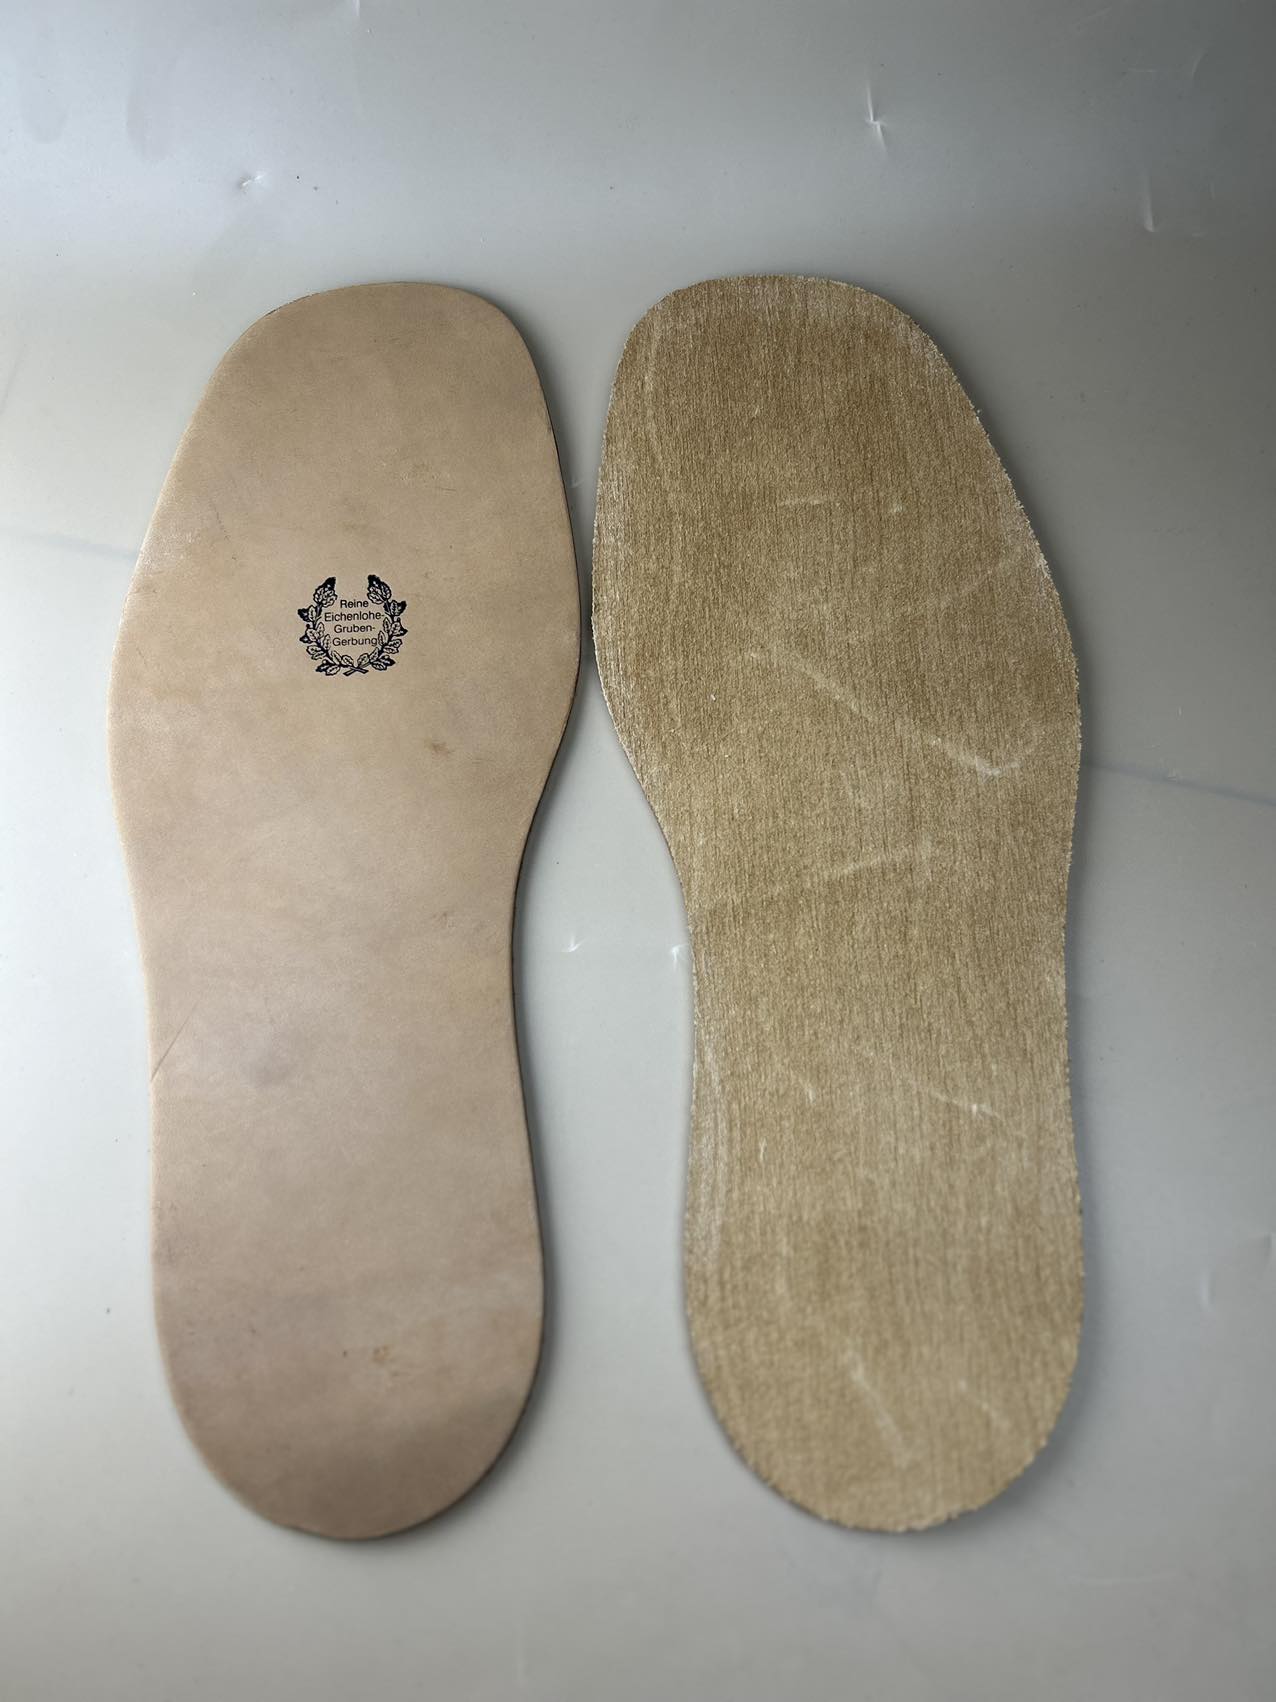 Gerberei Martin traditional oak bark sole